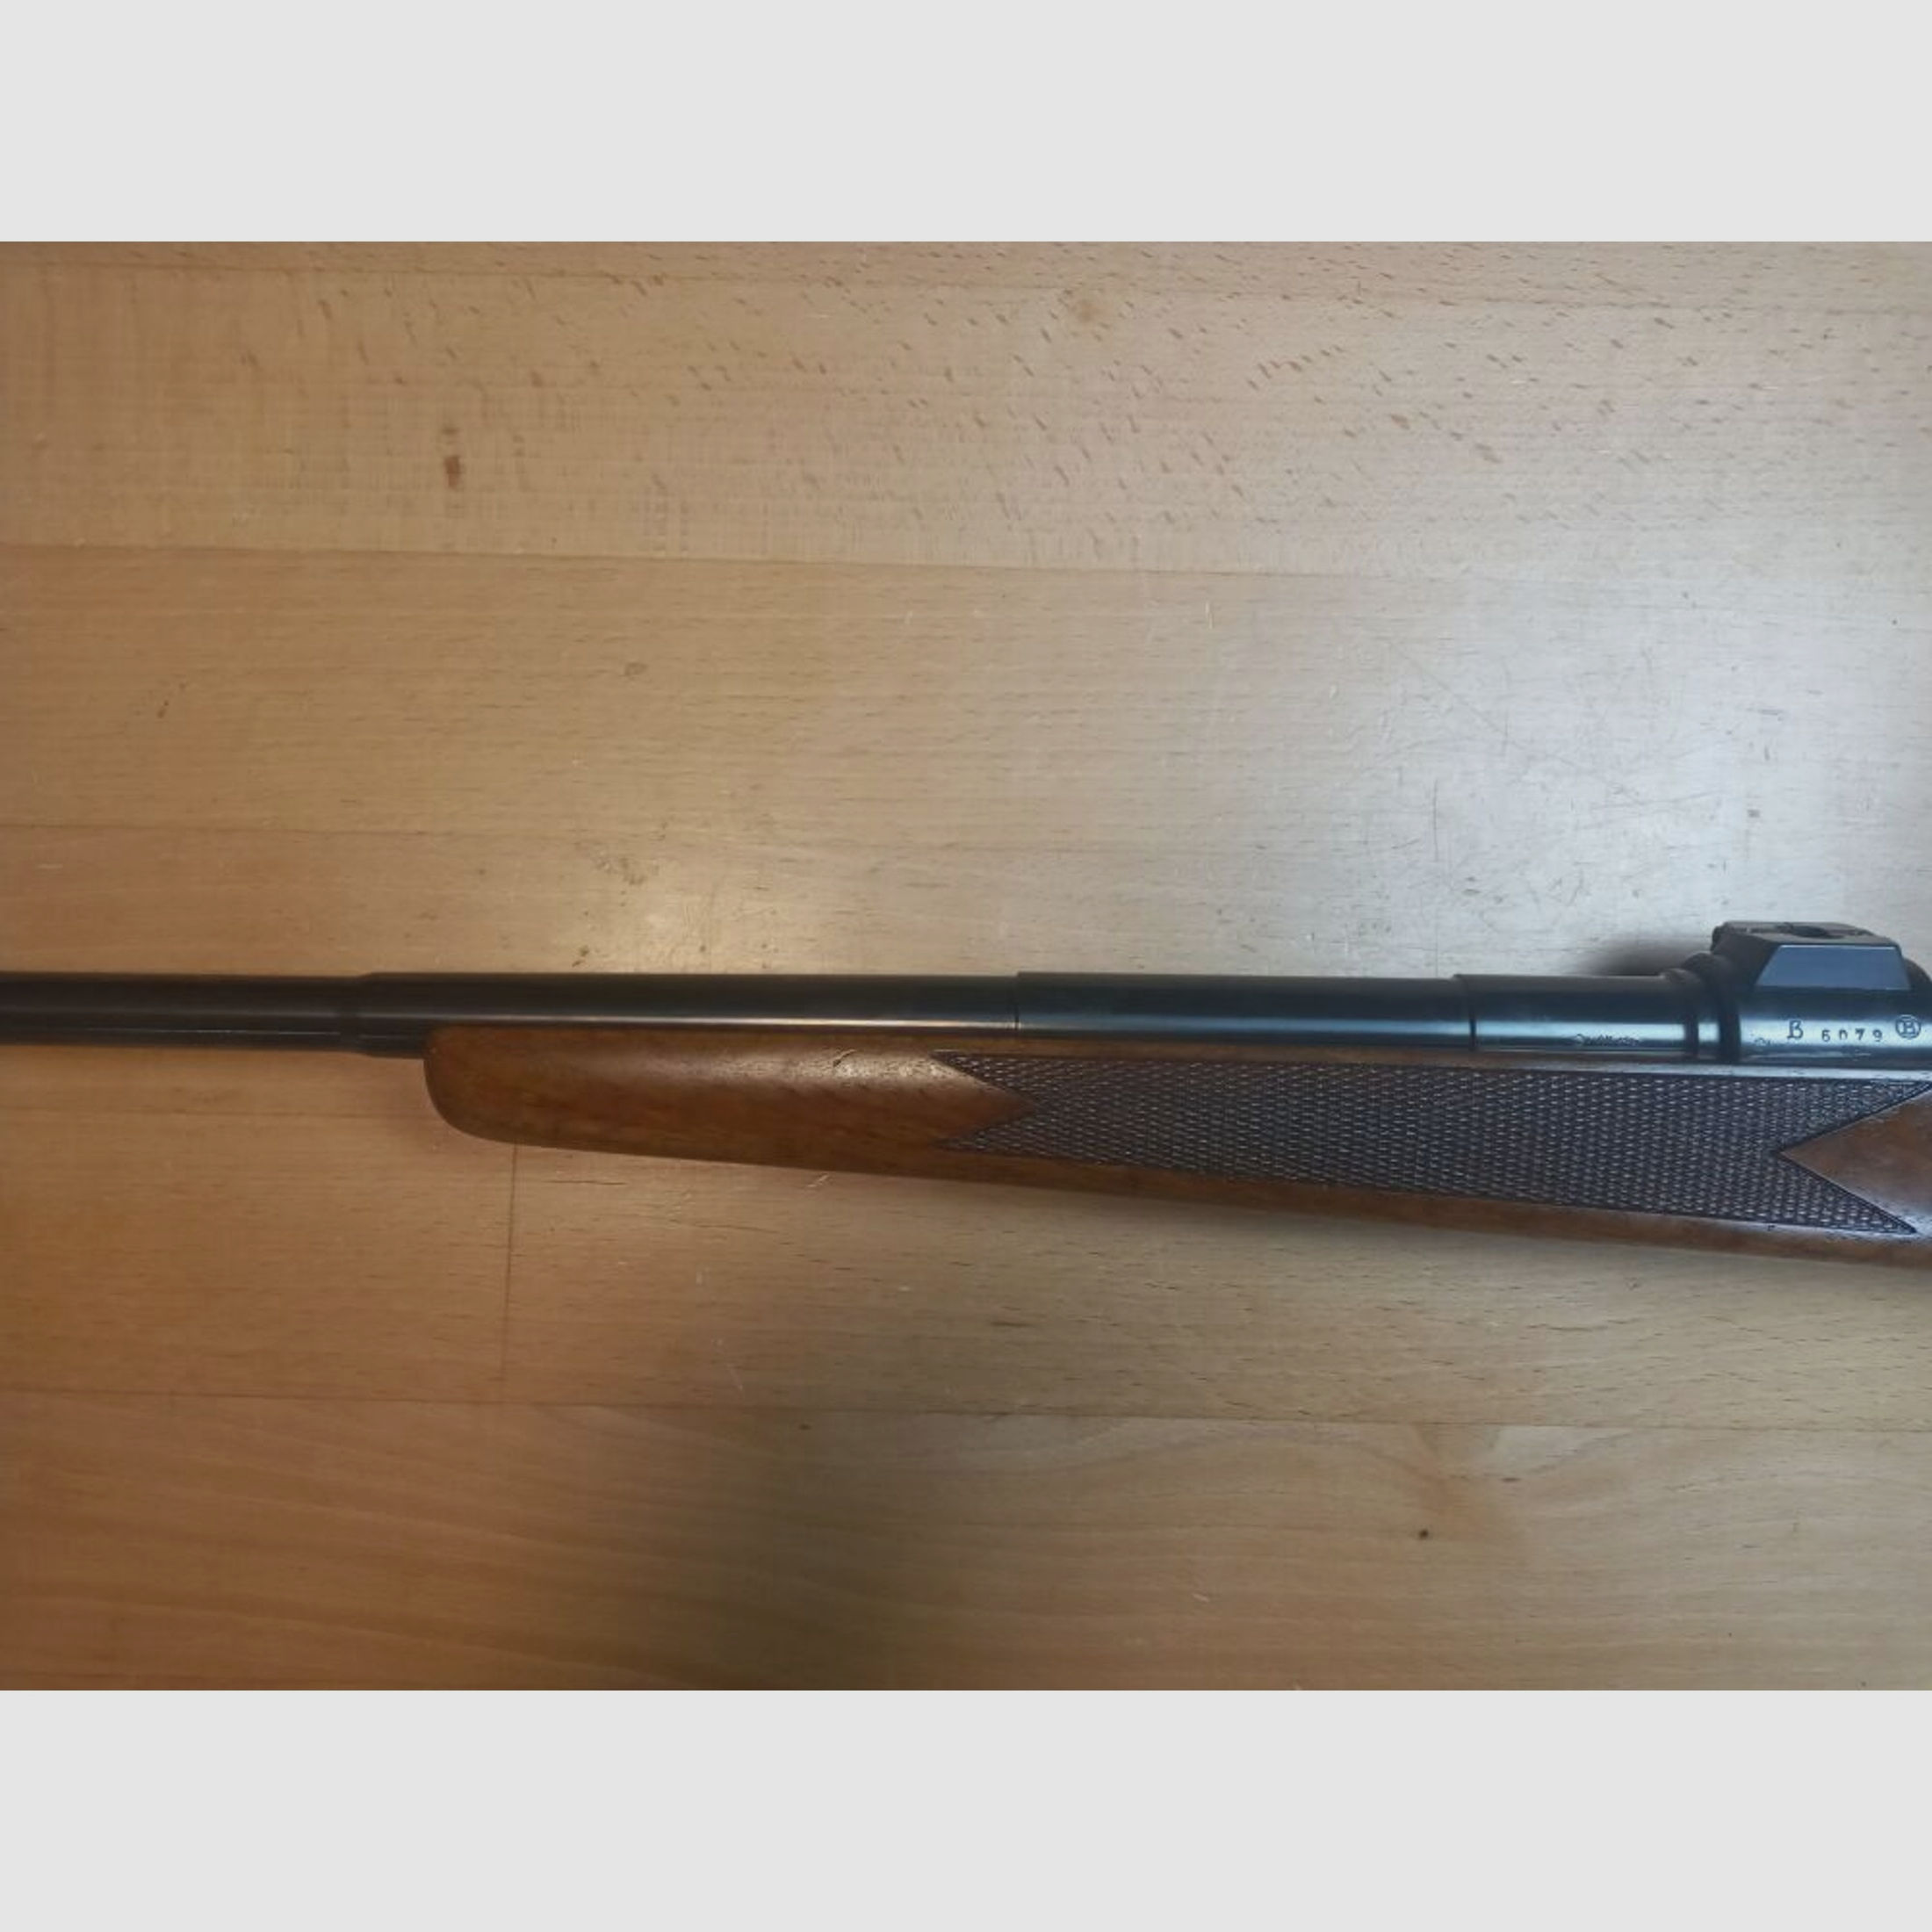 Eschbach	 Mauser 98